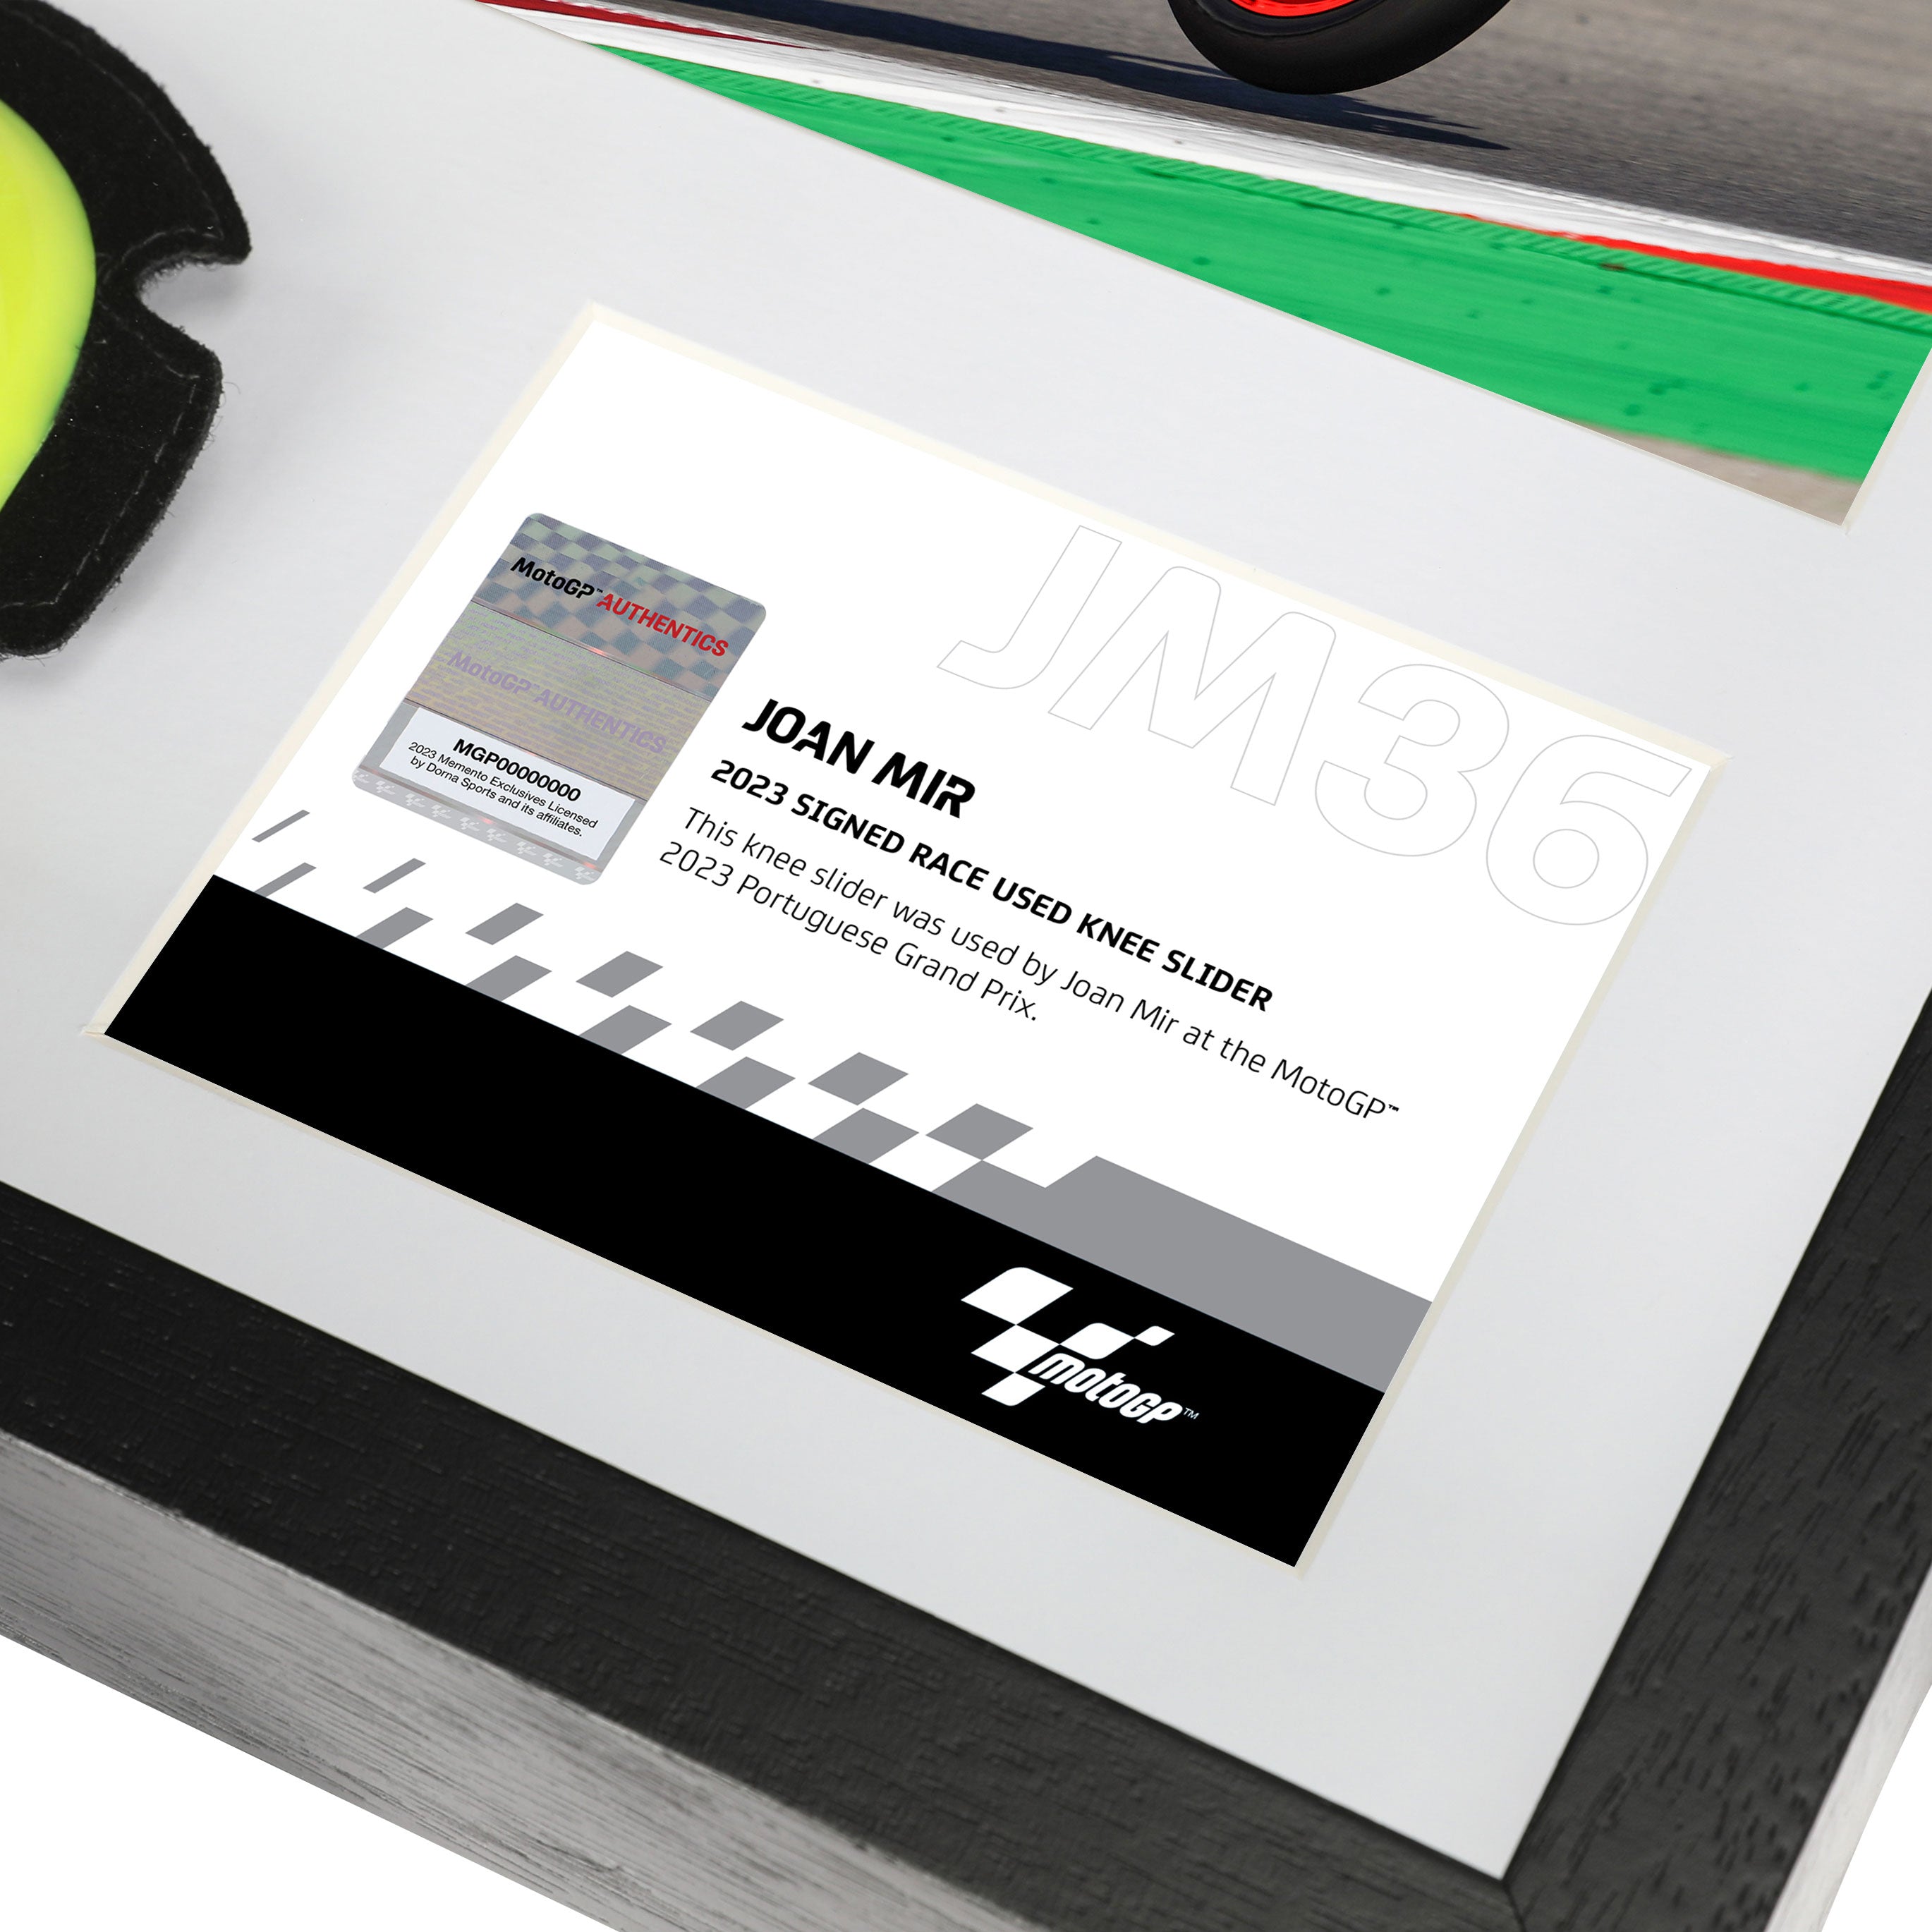 Joan Mir Signed Race-Used Knee Slider – Portuguese GP 2023